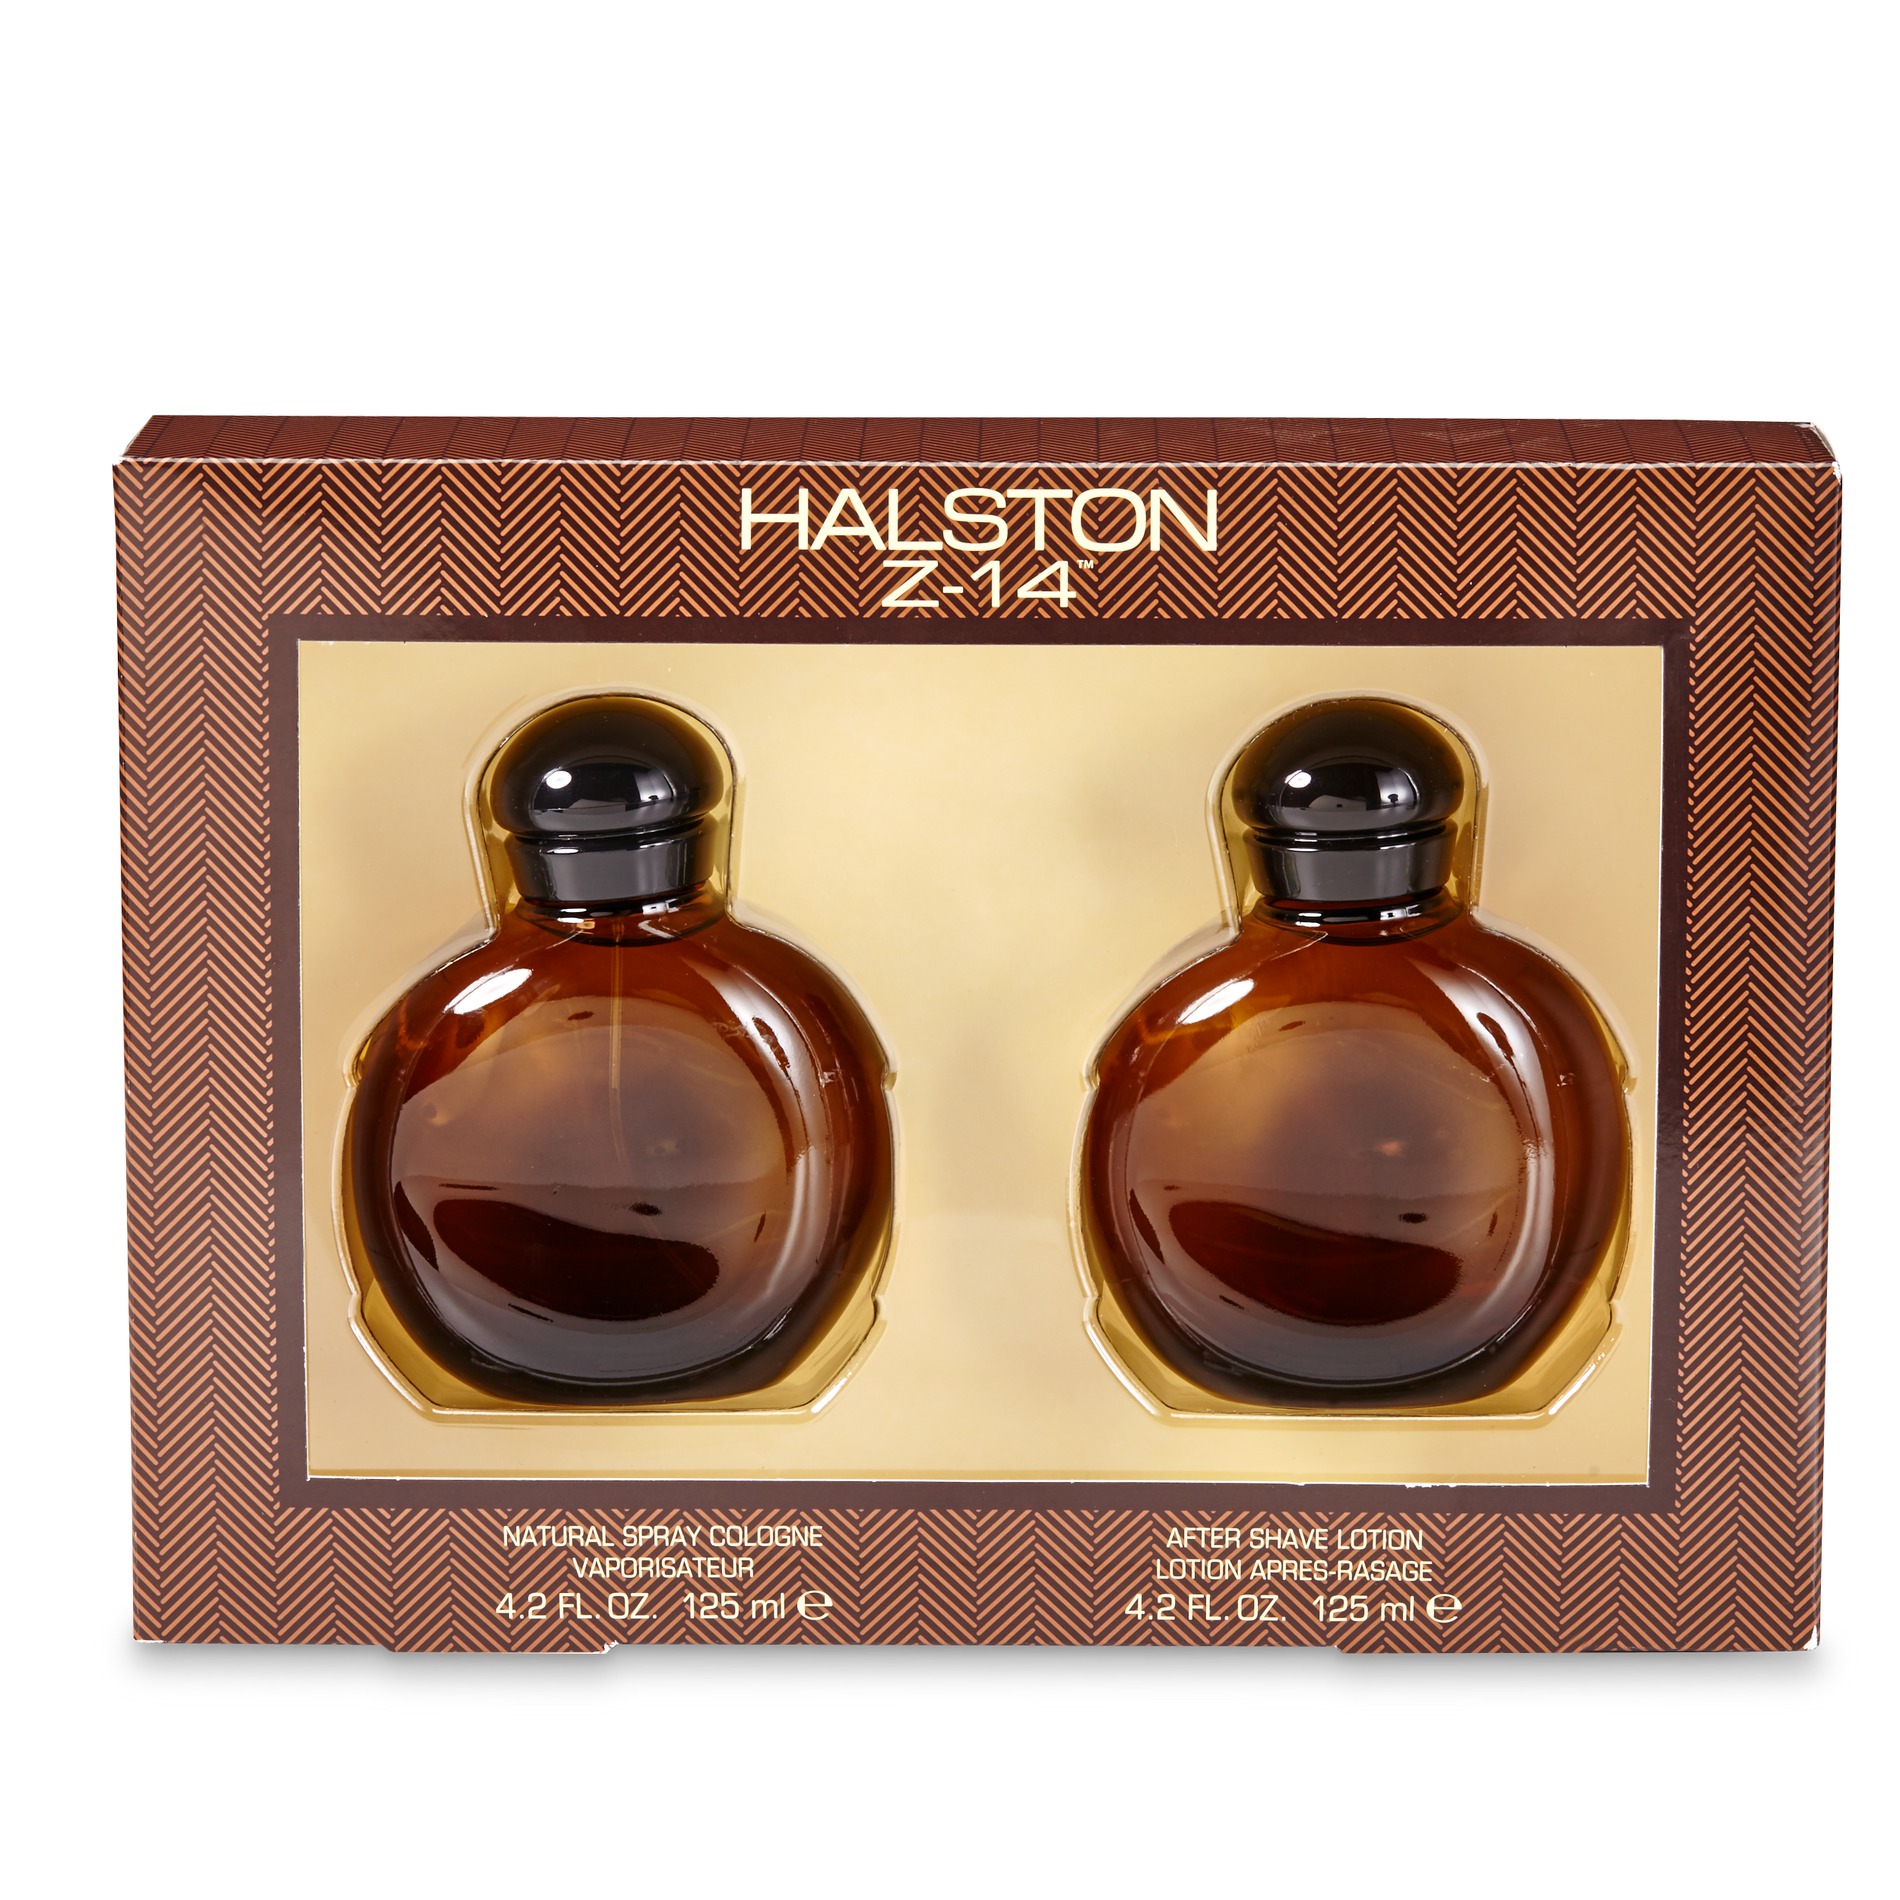 Halston Z-14 Men's Cologne & After Shave Lotion Set